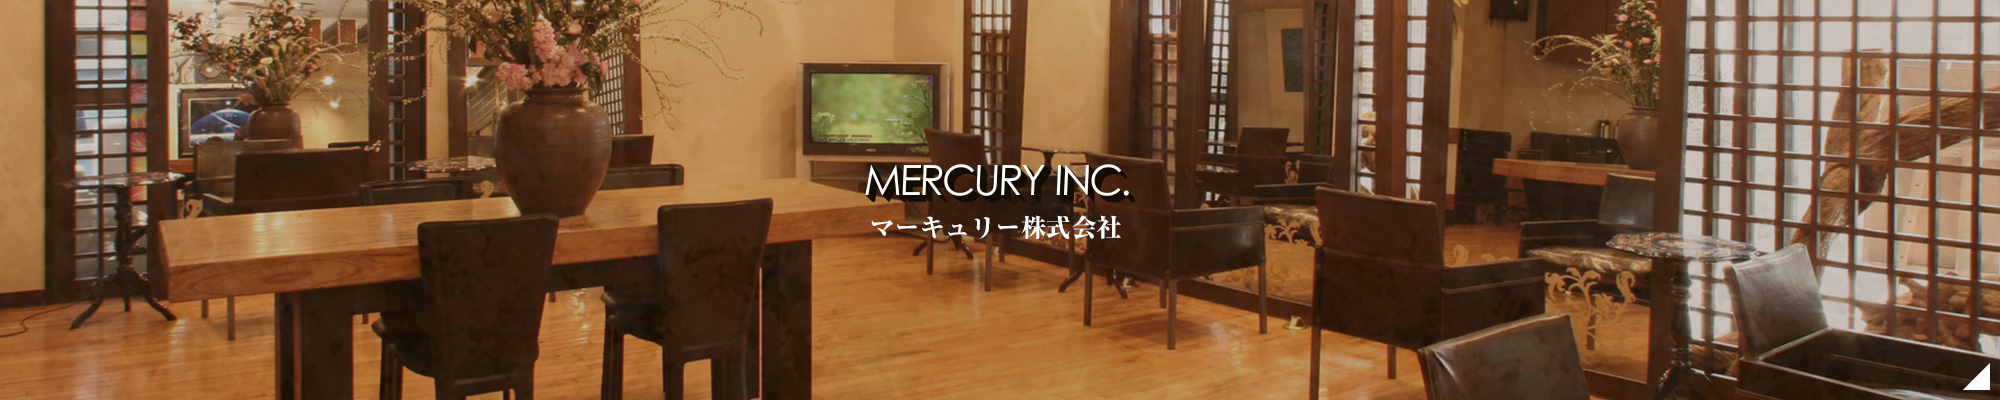 banner_mercury_on